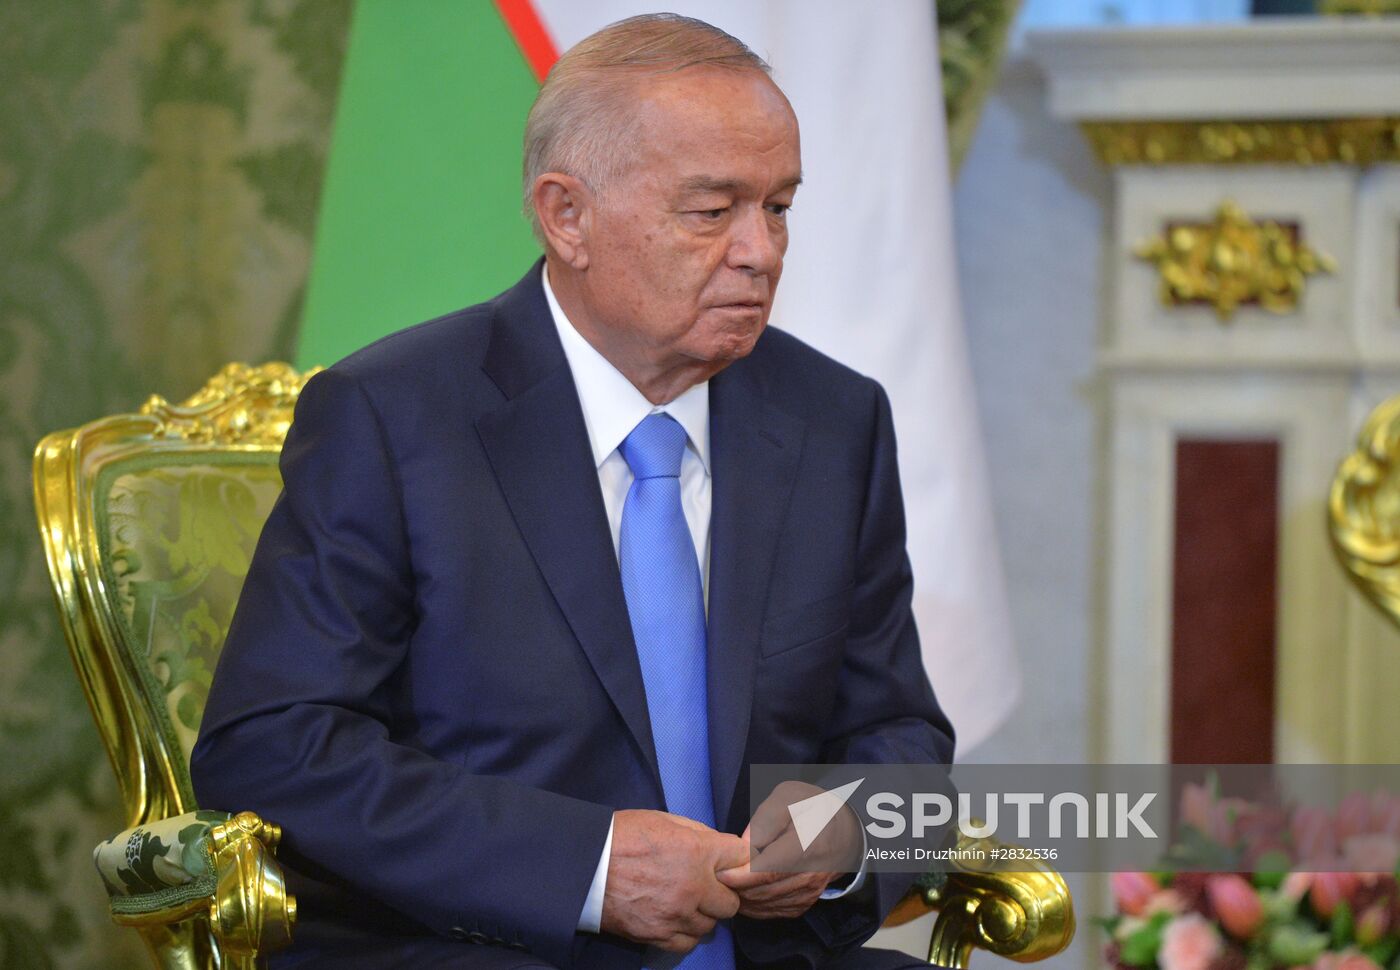 Russian President Vladimir Putin holds talks with President of Uzbekistan Islam Karimov